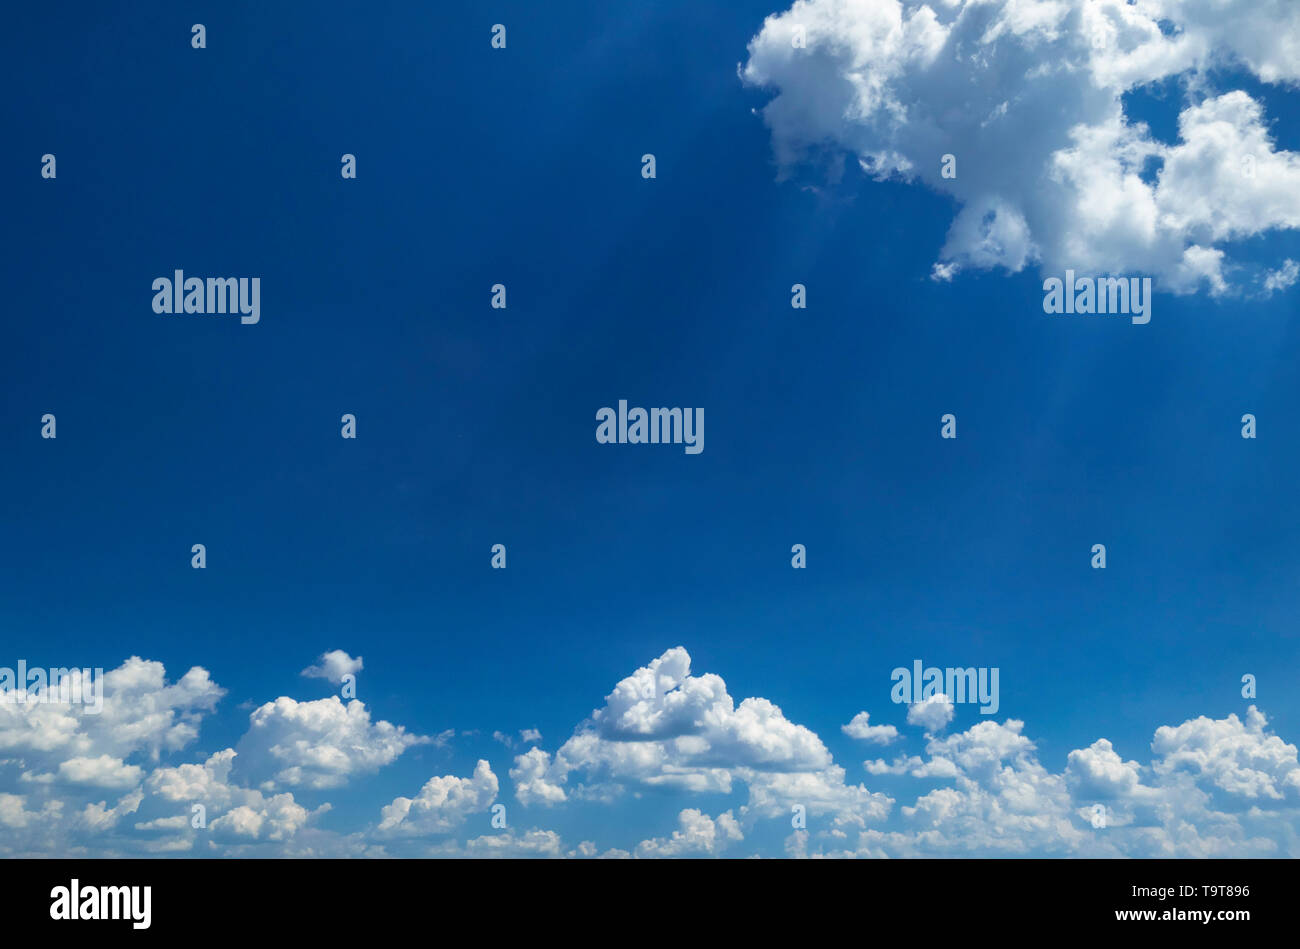 Cumuluswolken in the blue sky, Cumuluswolken am blauen Himmel Stock Photo